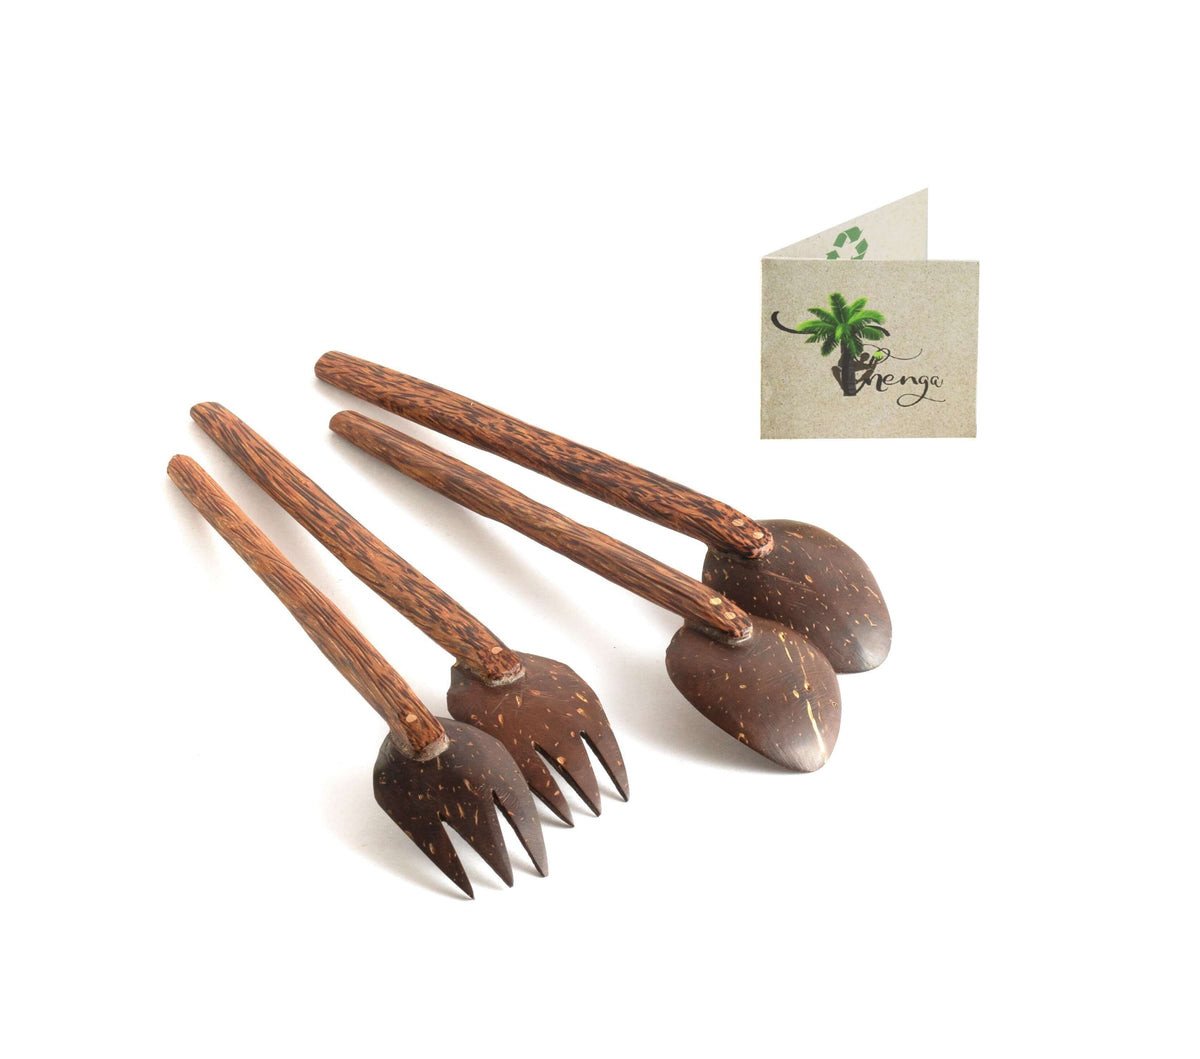 Coconut shell Spoon & Fork (Set of 2) Eco Friendly & Handmade